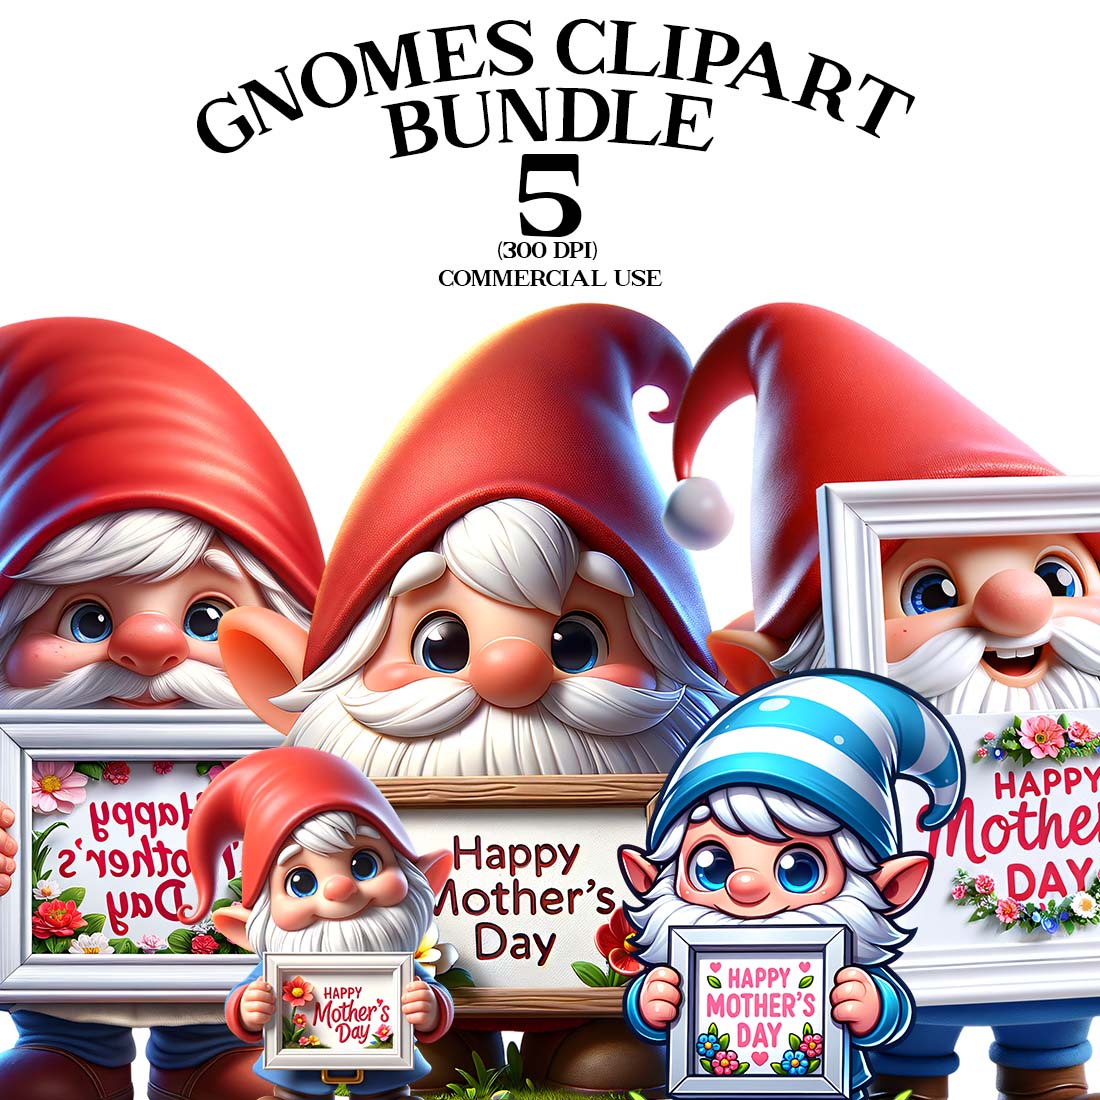 Mothers Day Gnome Clipart Bundle | Clipart Bundle cover image.